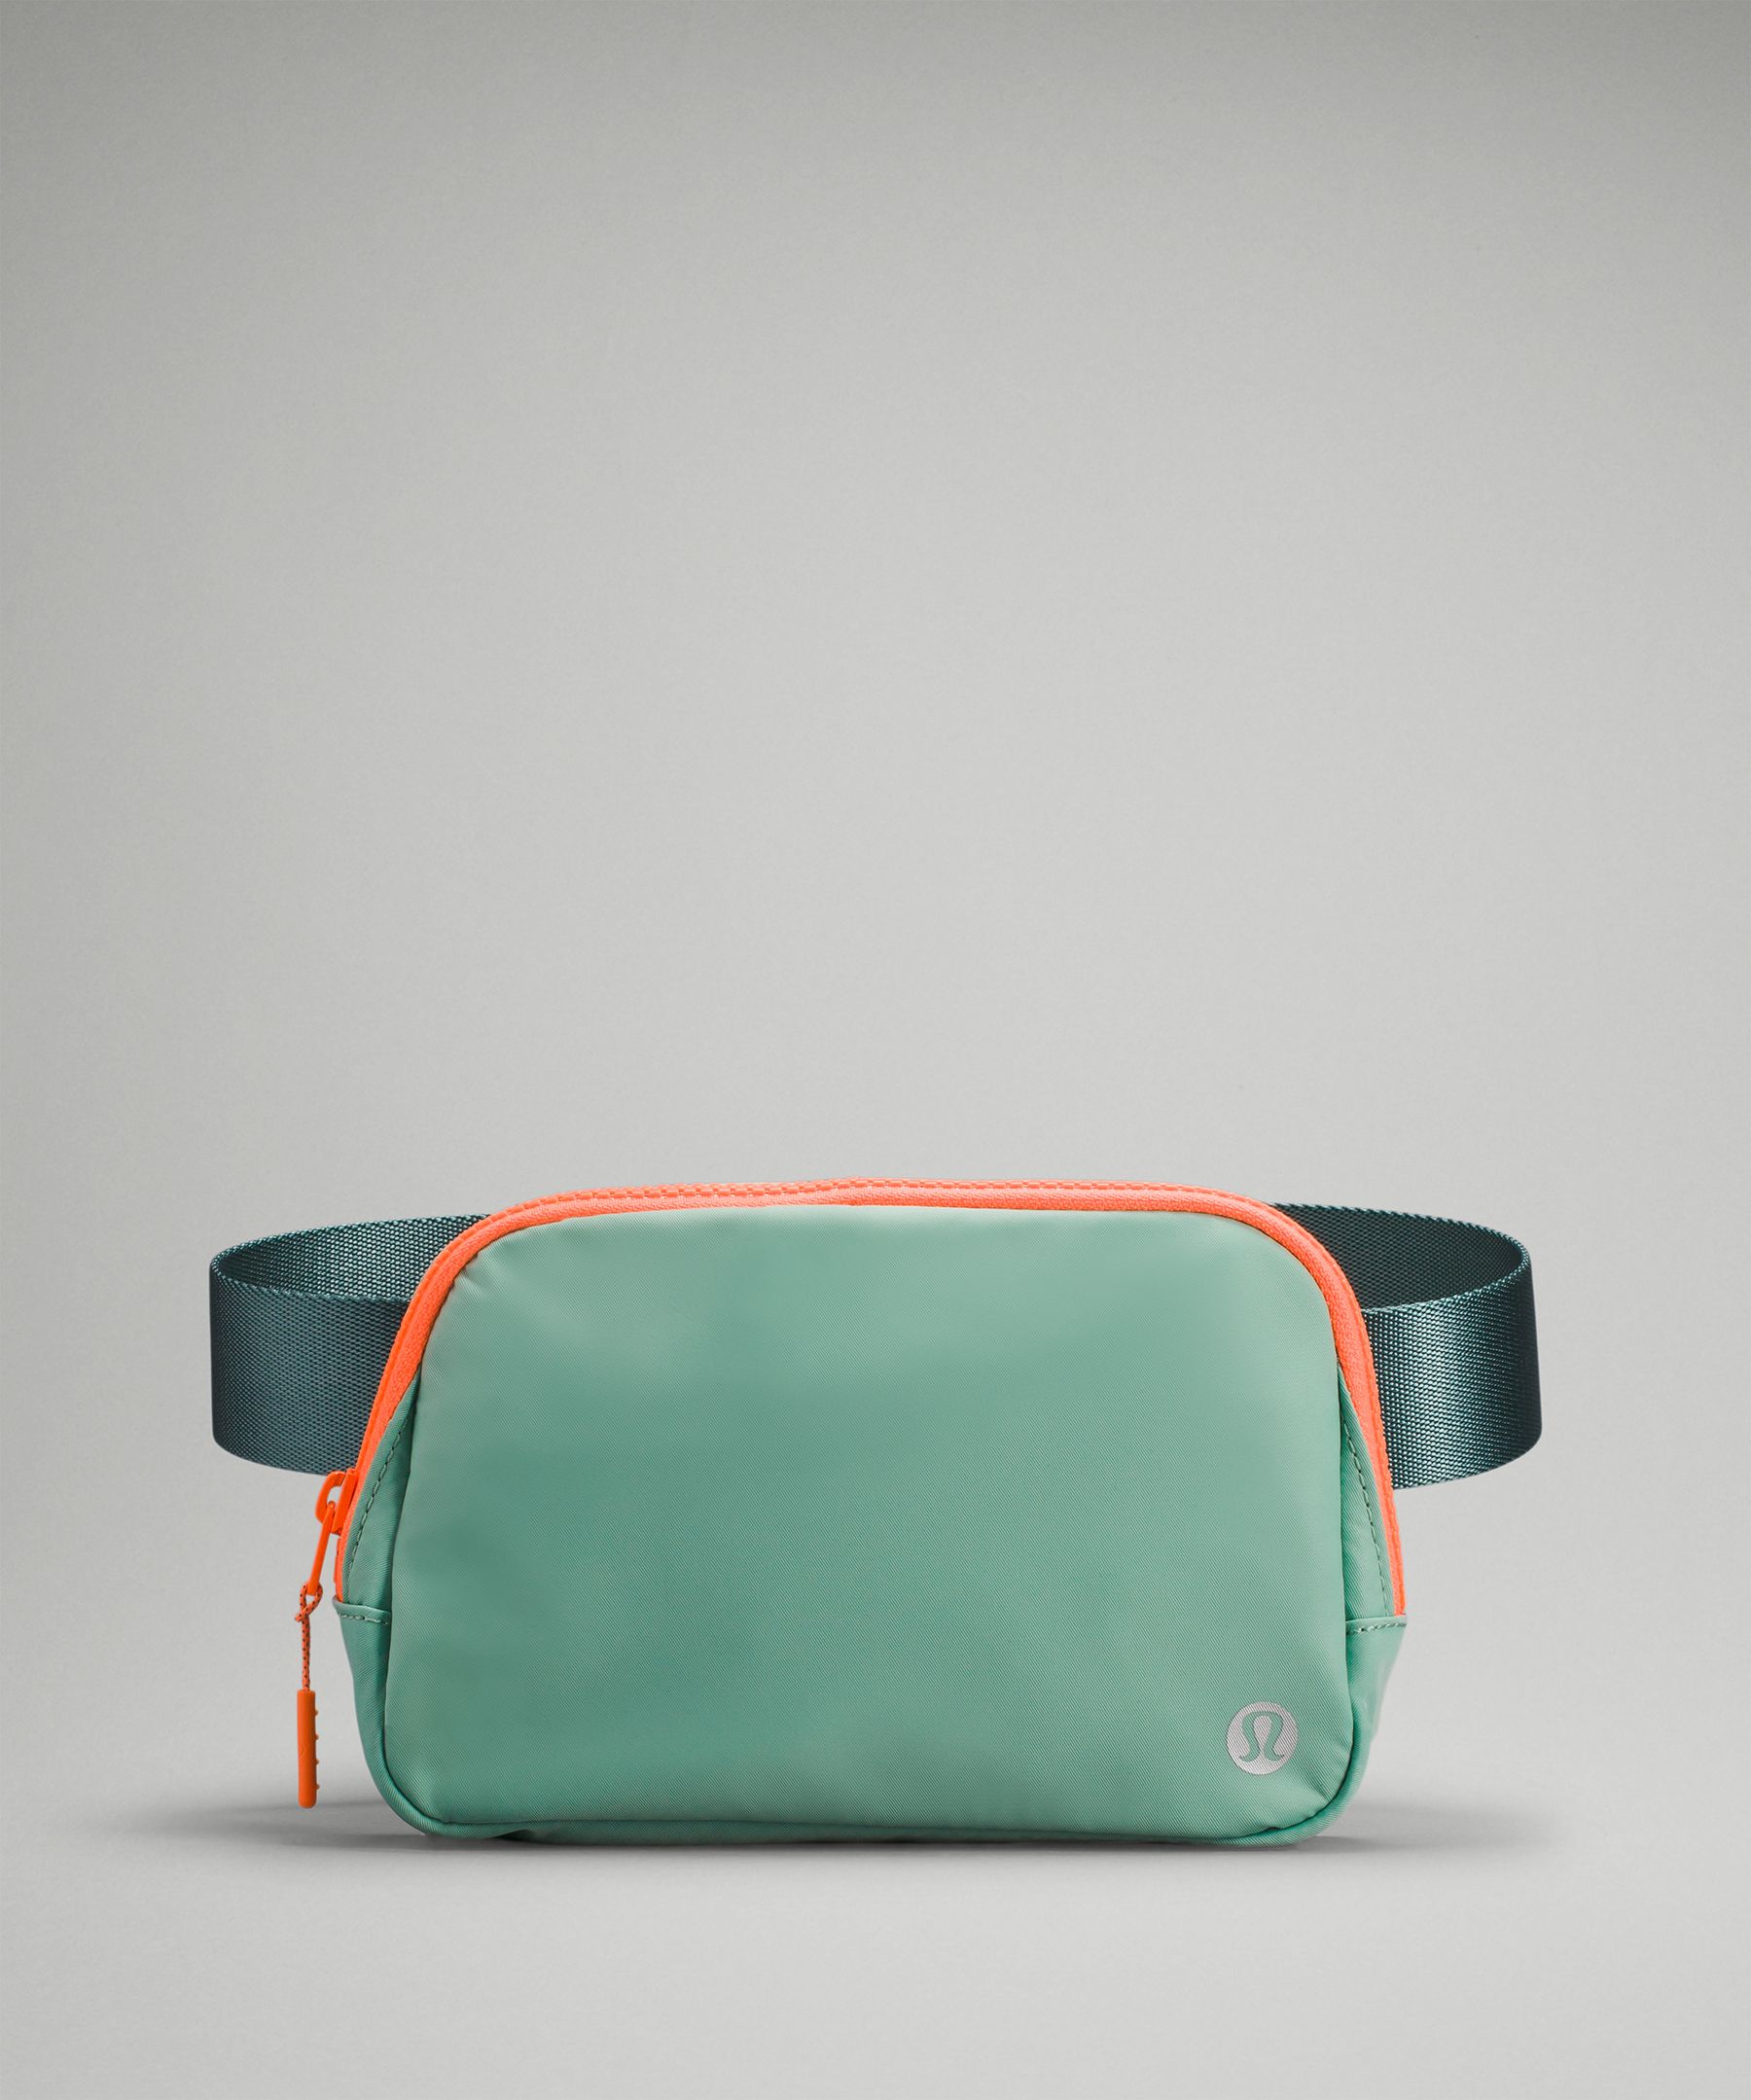 lululemon everywhere belt bag TIDEWATER TEAL - Women's handbags